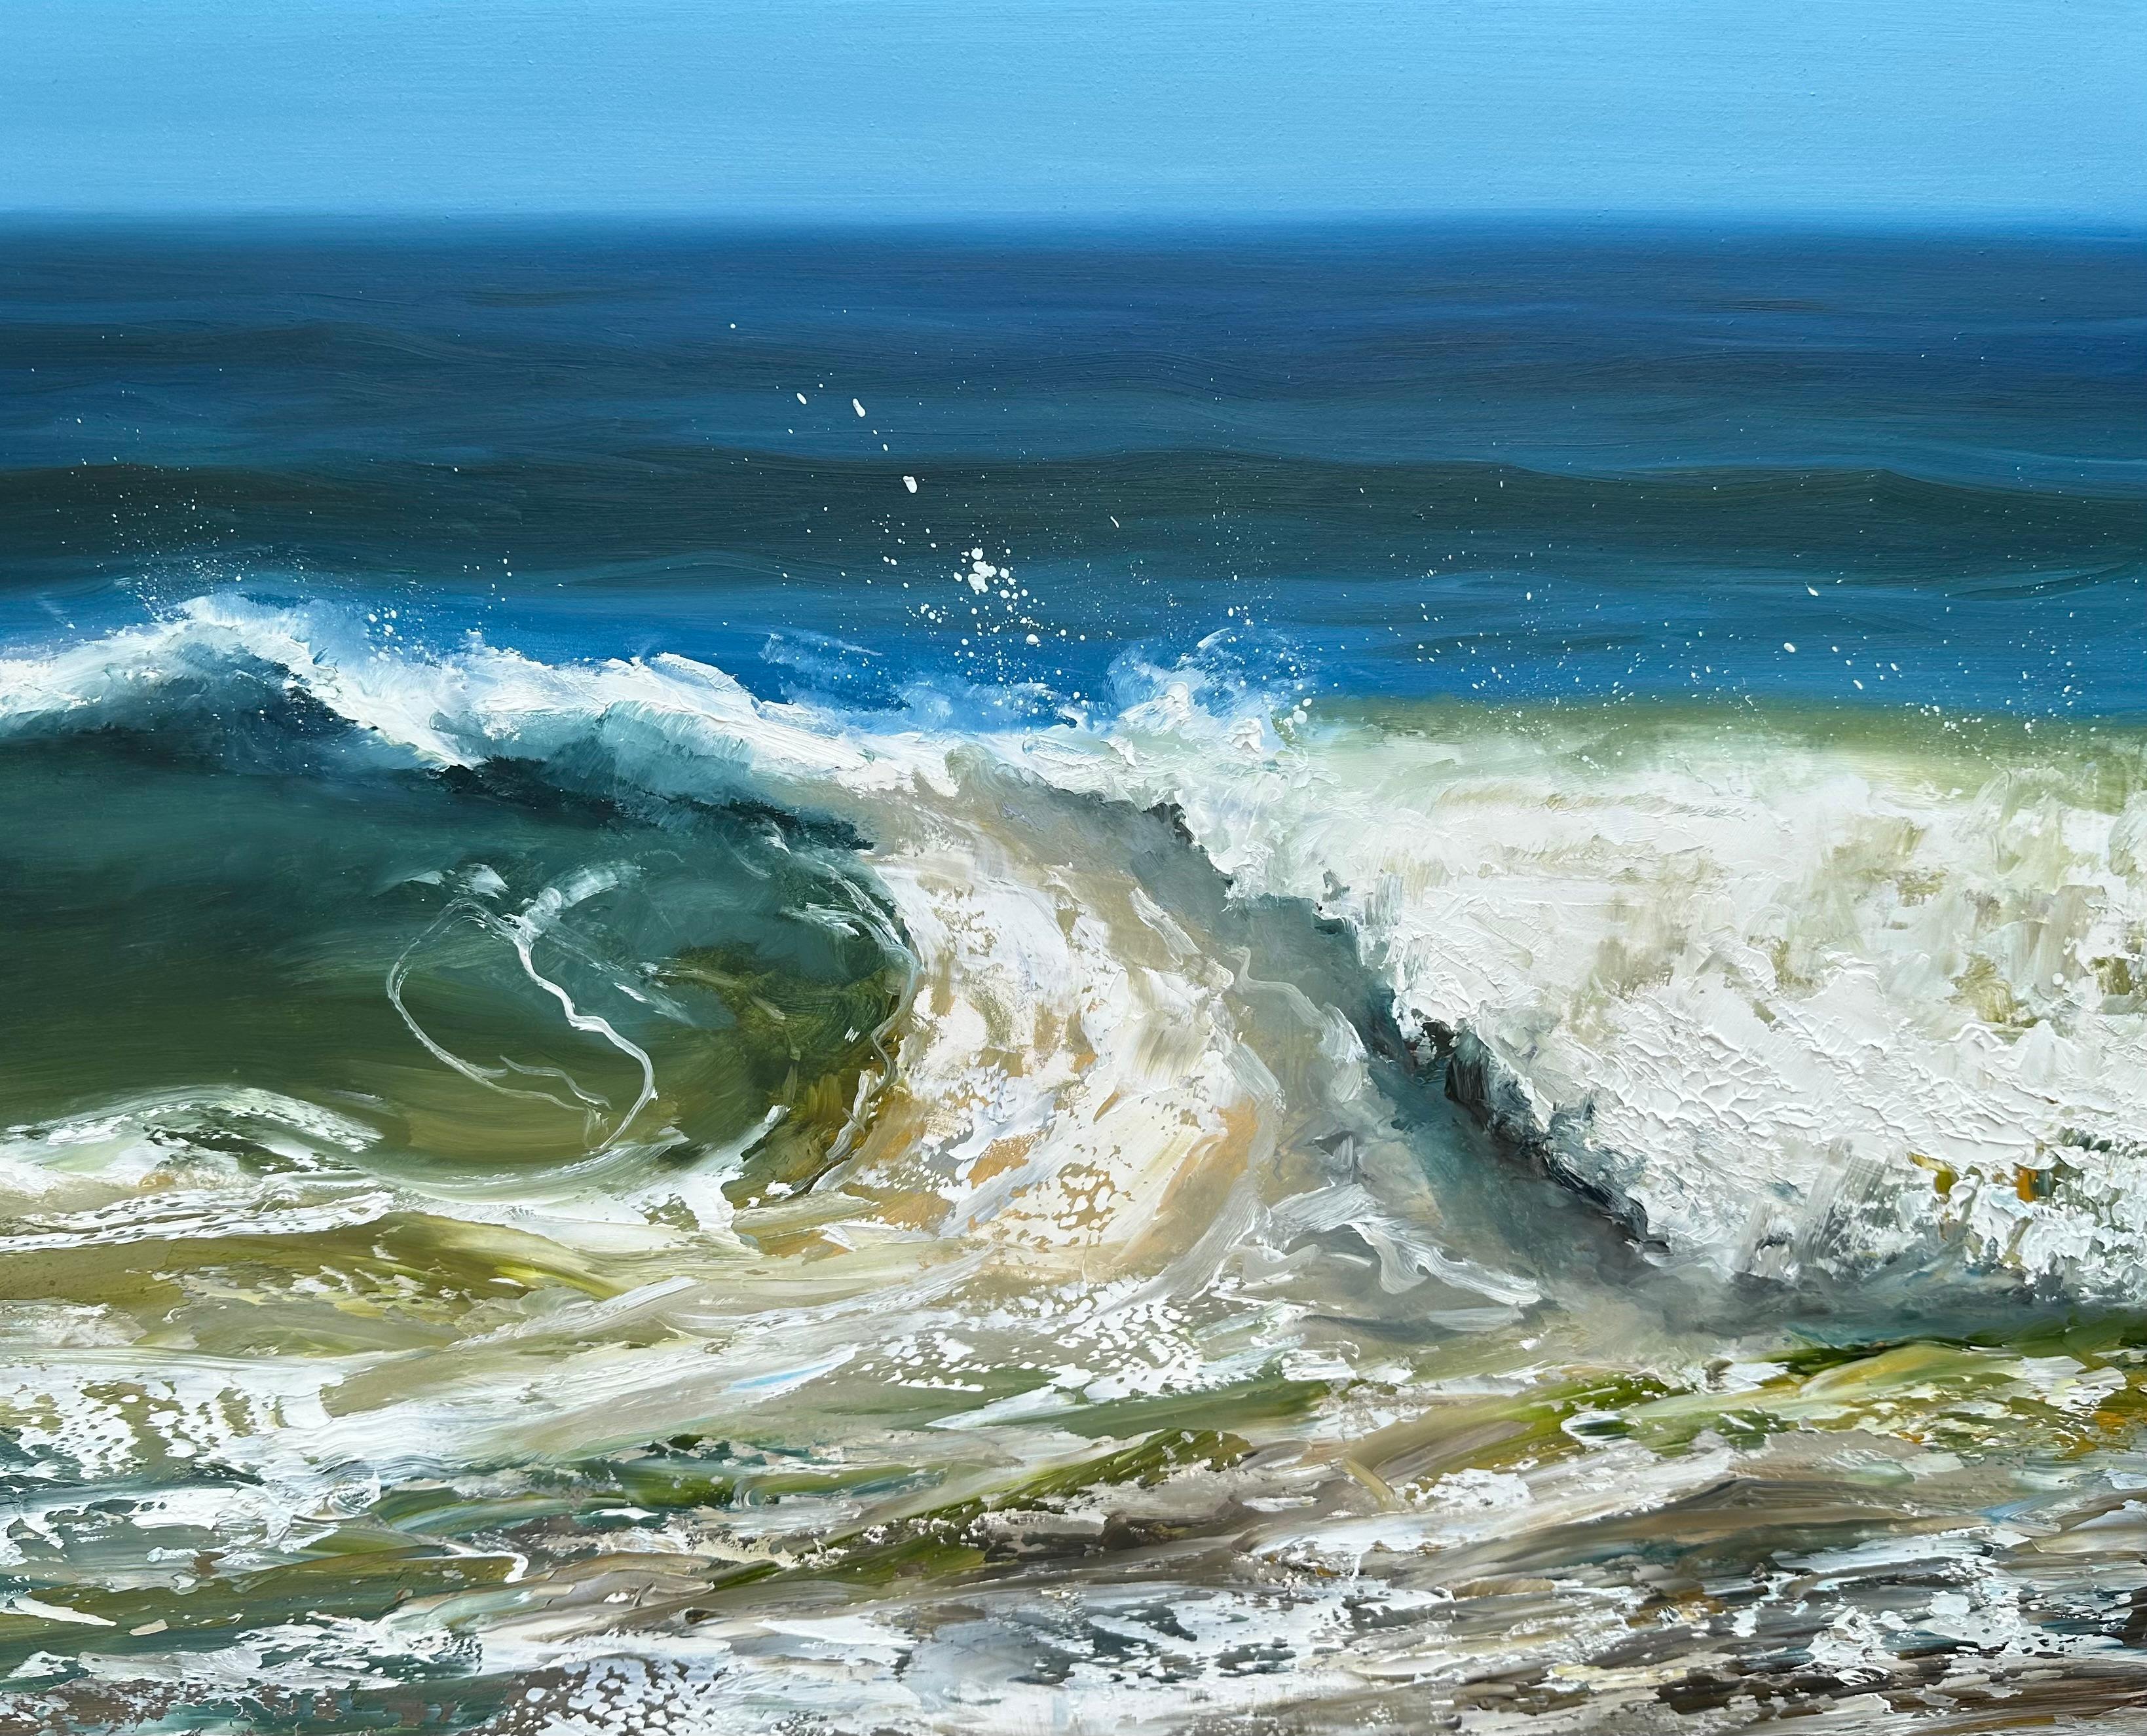 Whitney Knapp Landscape Painting - "Sandy Breaker" oil painting of a crashing blue/green wave in the ocean